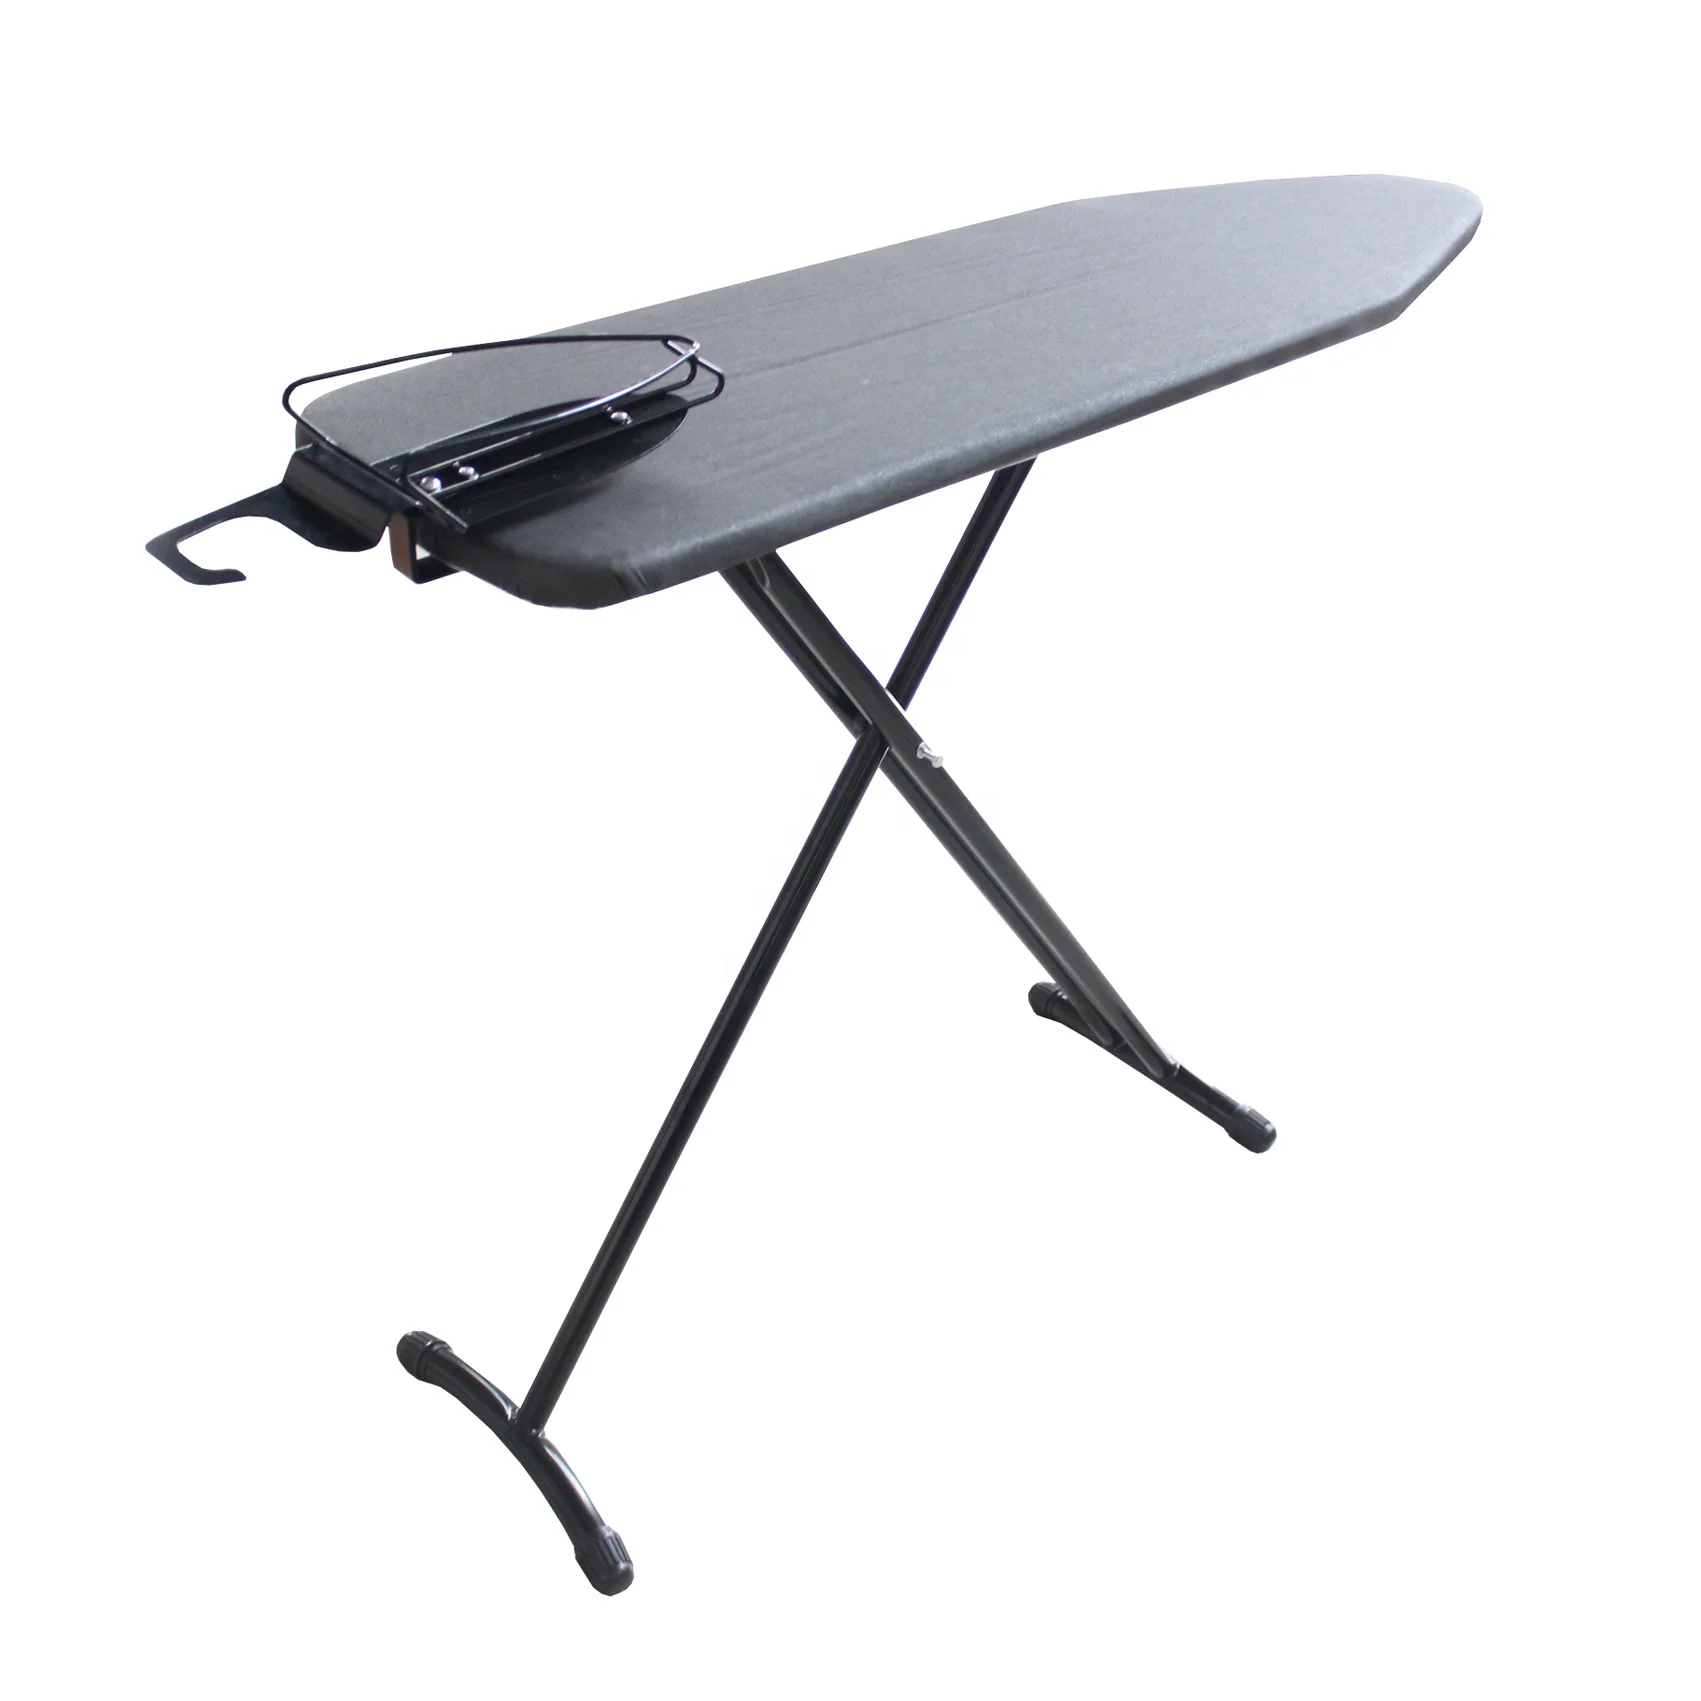 Ironing Board Set folding ironing board with Flat-iron stands Paired with iron and ironing board holder for use